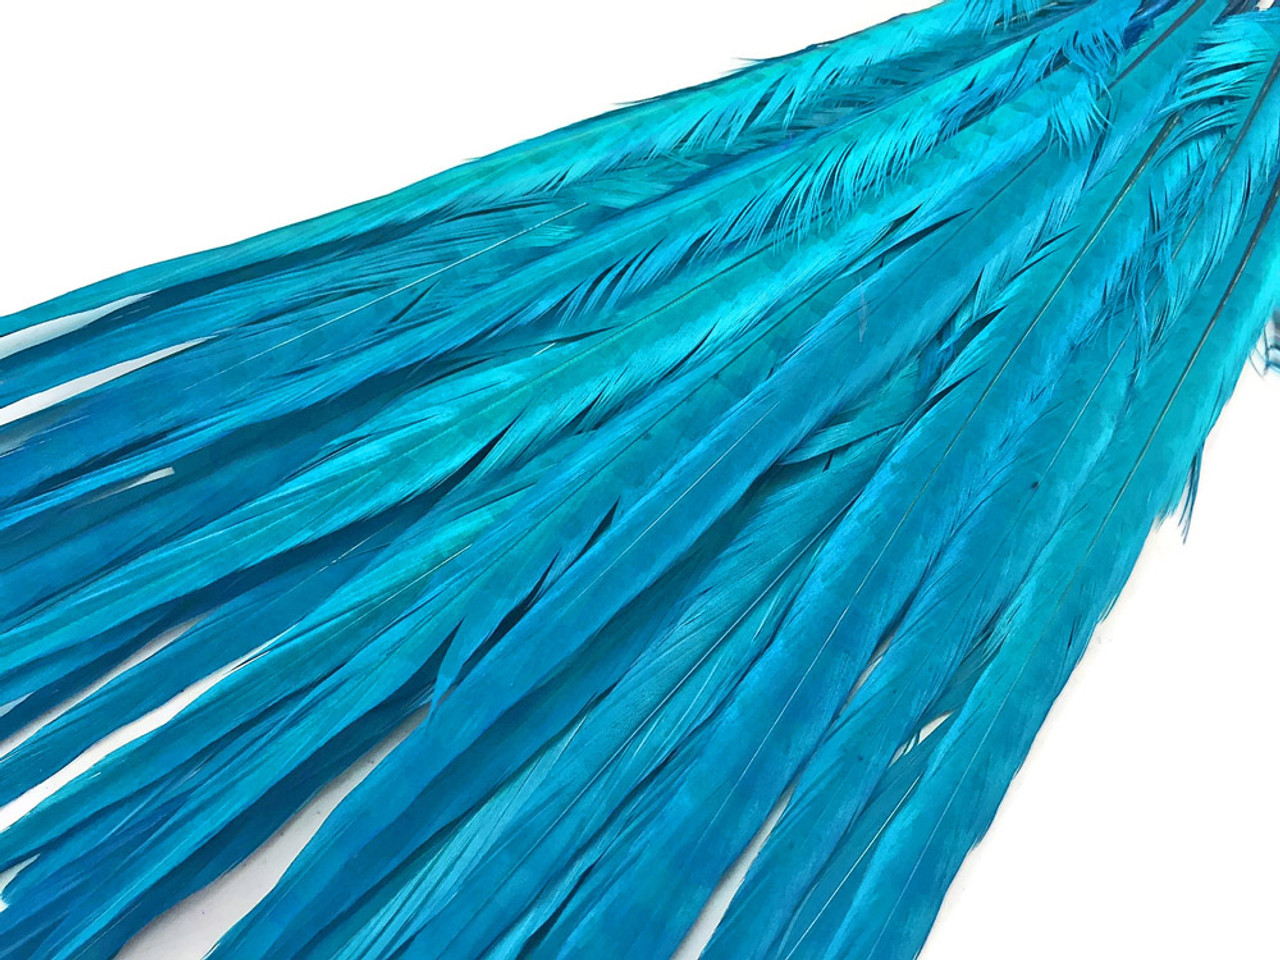 50pcs/lot!12-1430-35cm Dyed Perfect Ringneck Pheasant Tail